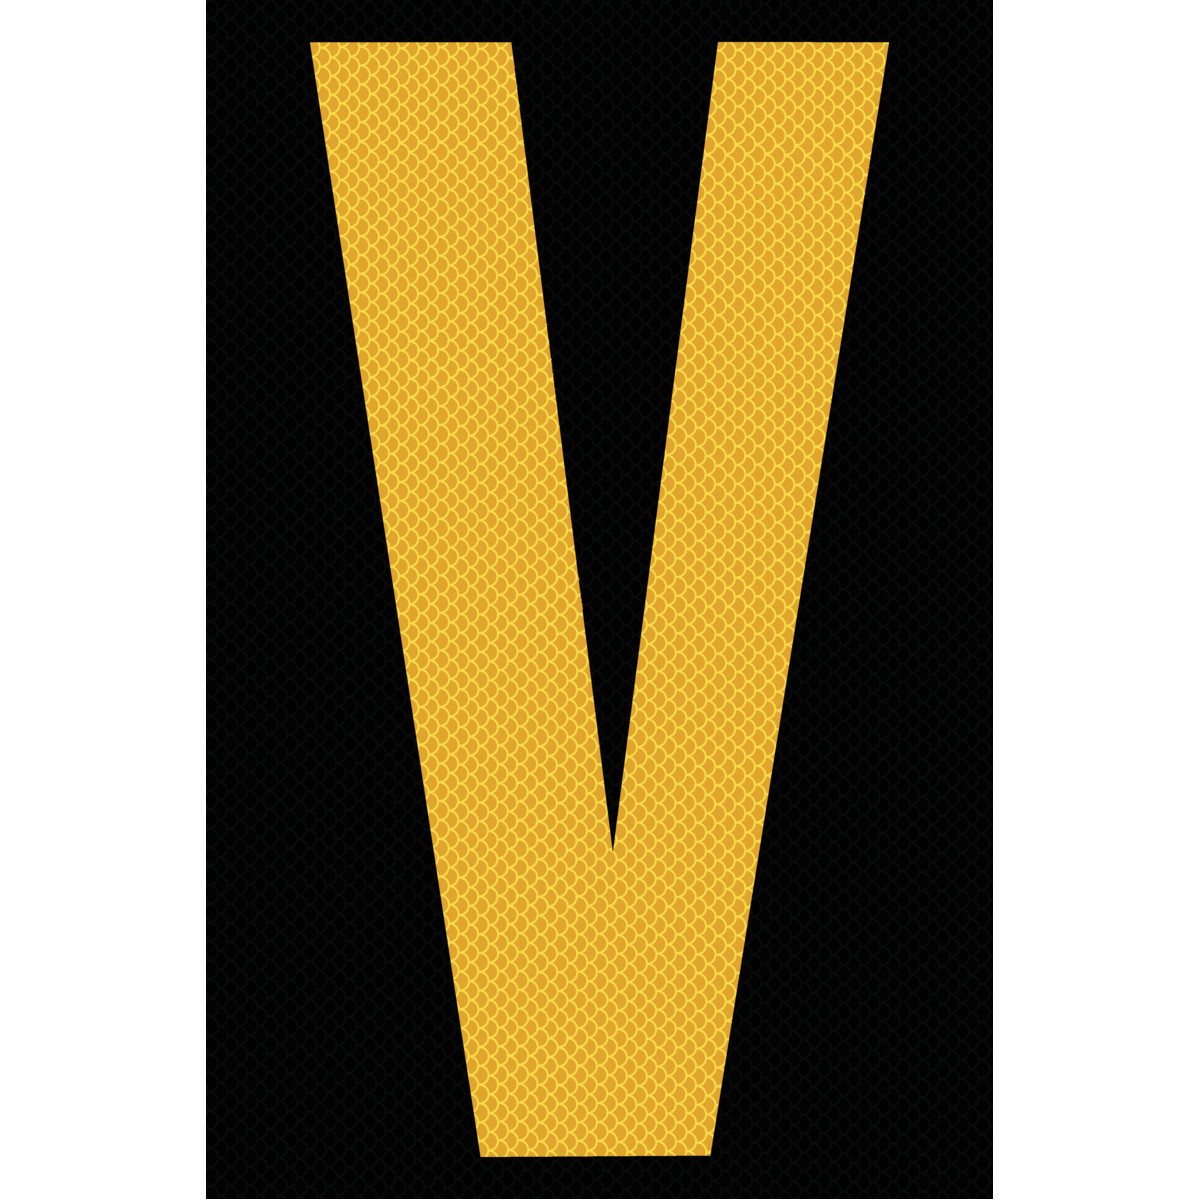 4" Yellow on Black High Intensity Reflective "V"